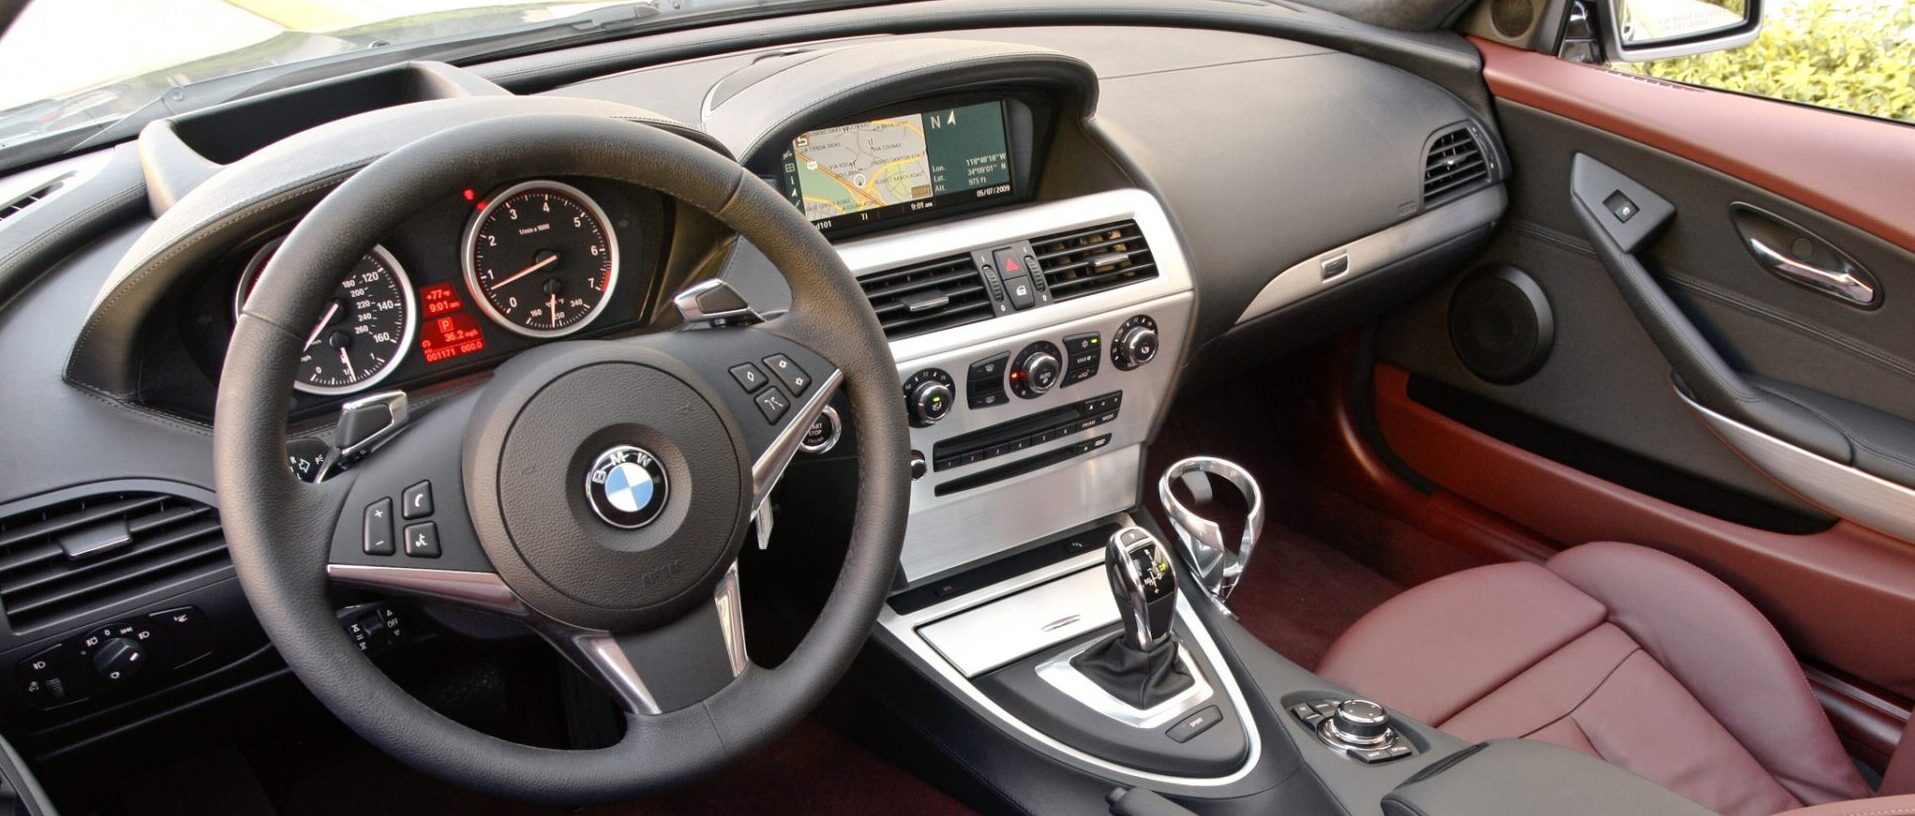 BMW 6 Series Coupe & Gran Turismo